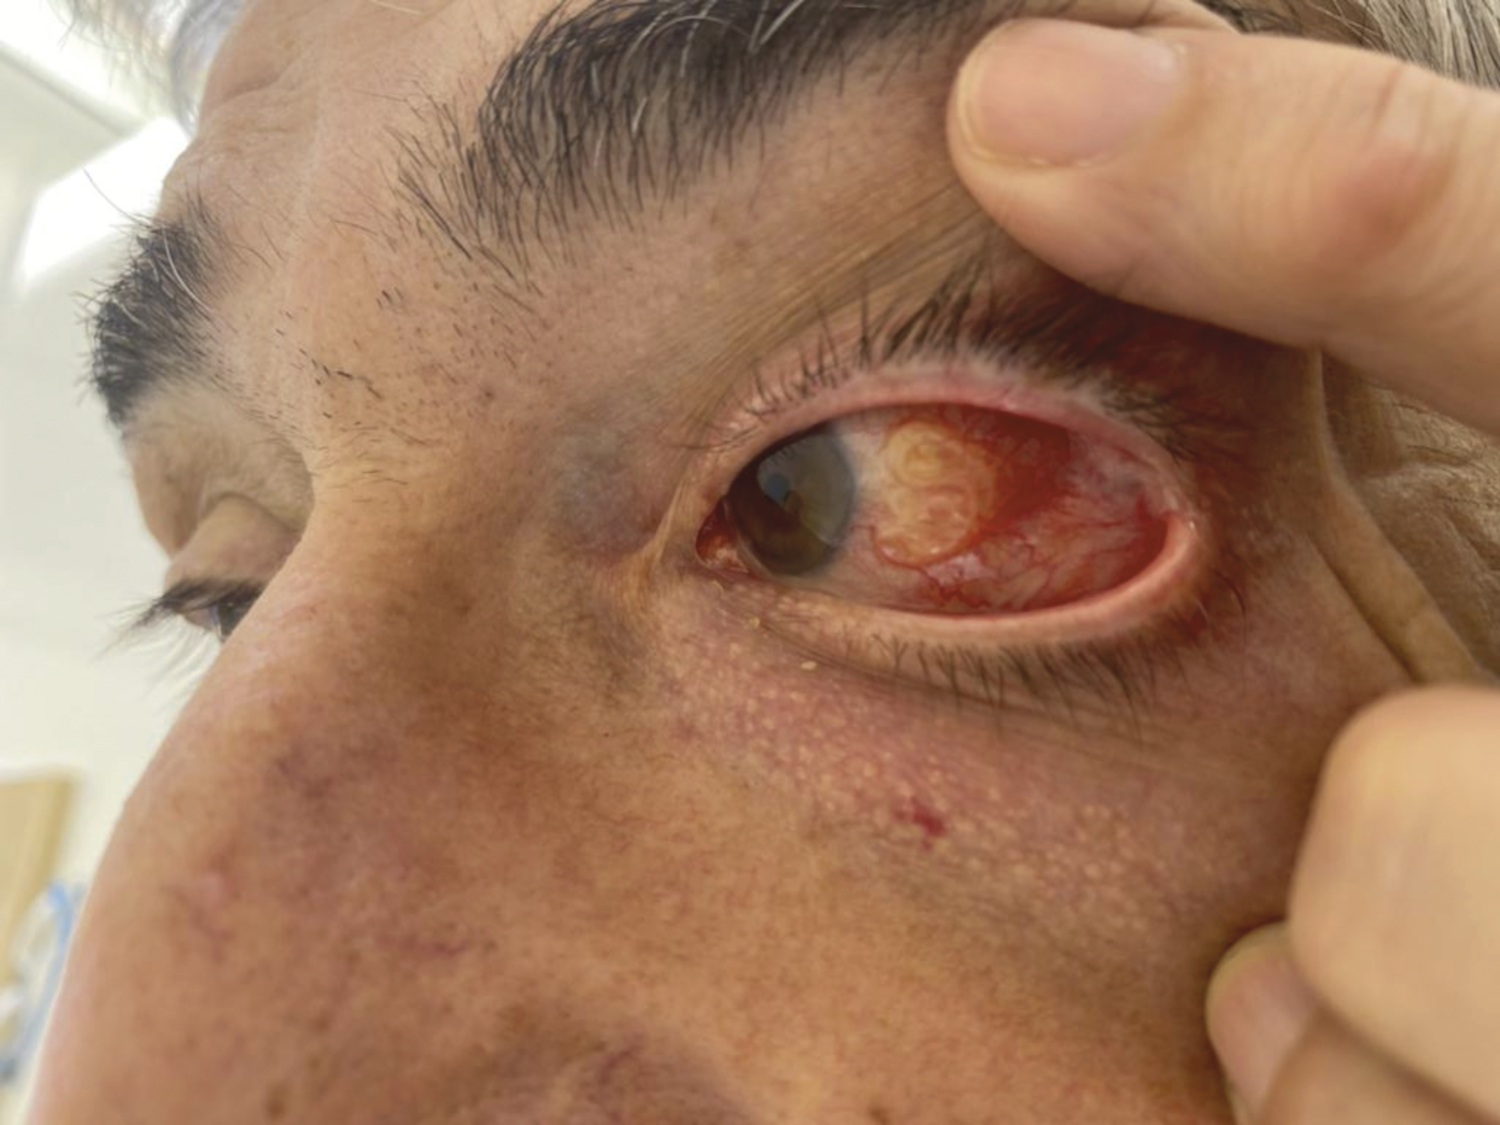 Nouveau cas de dirofilariose oculaire en Corse - Figure